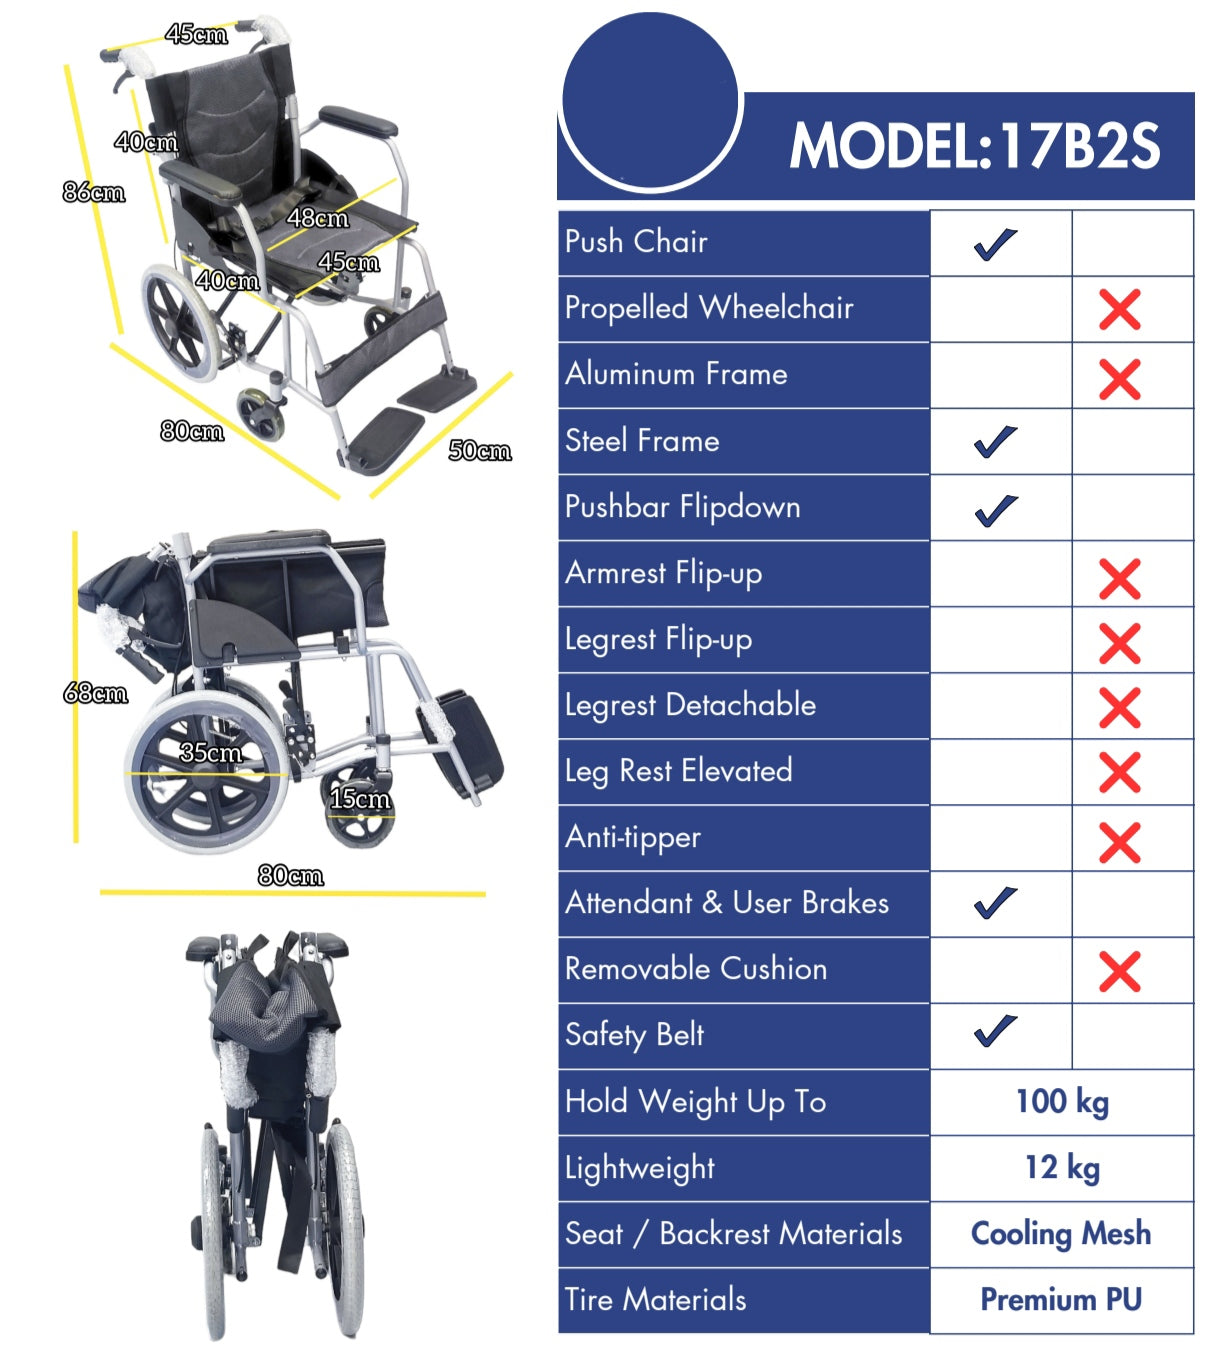 1 - "Model 17B2S" - Pushchair - Standard Wheelchair